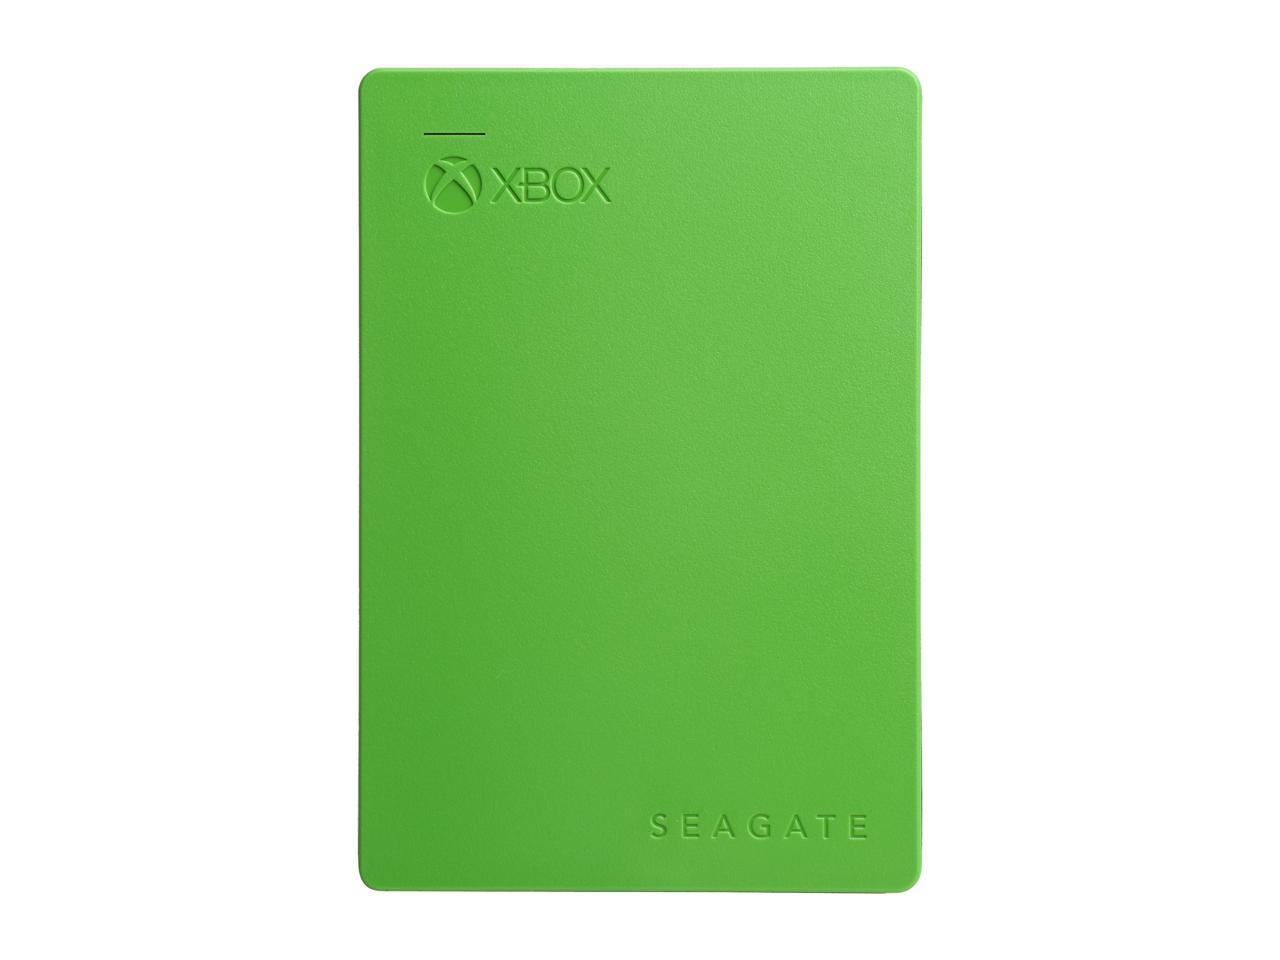 Seagate 4Tb Game Drive For Xbox One Portable Usb 3.0 Model Stea4000402 - Green